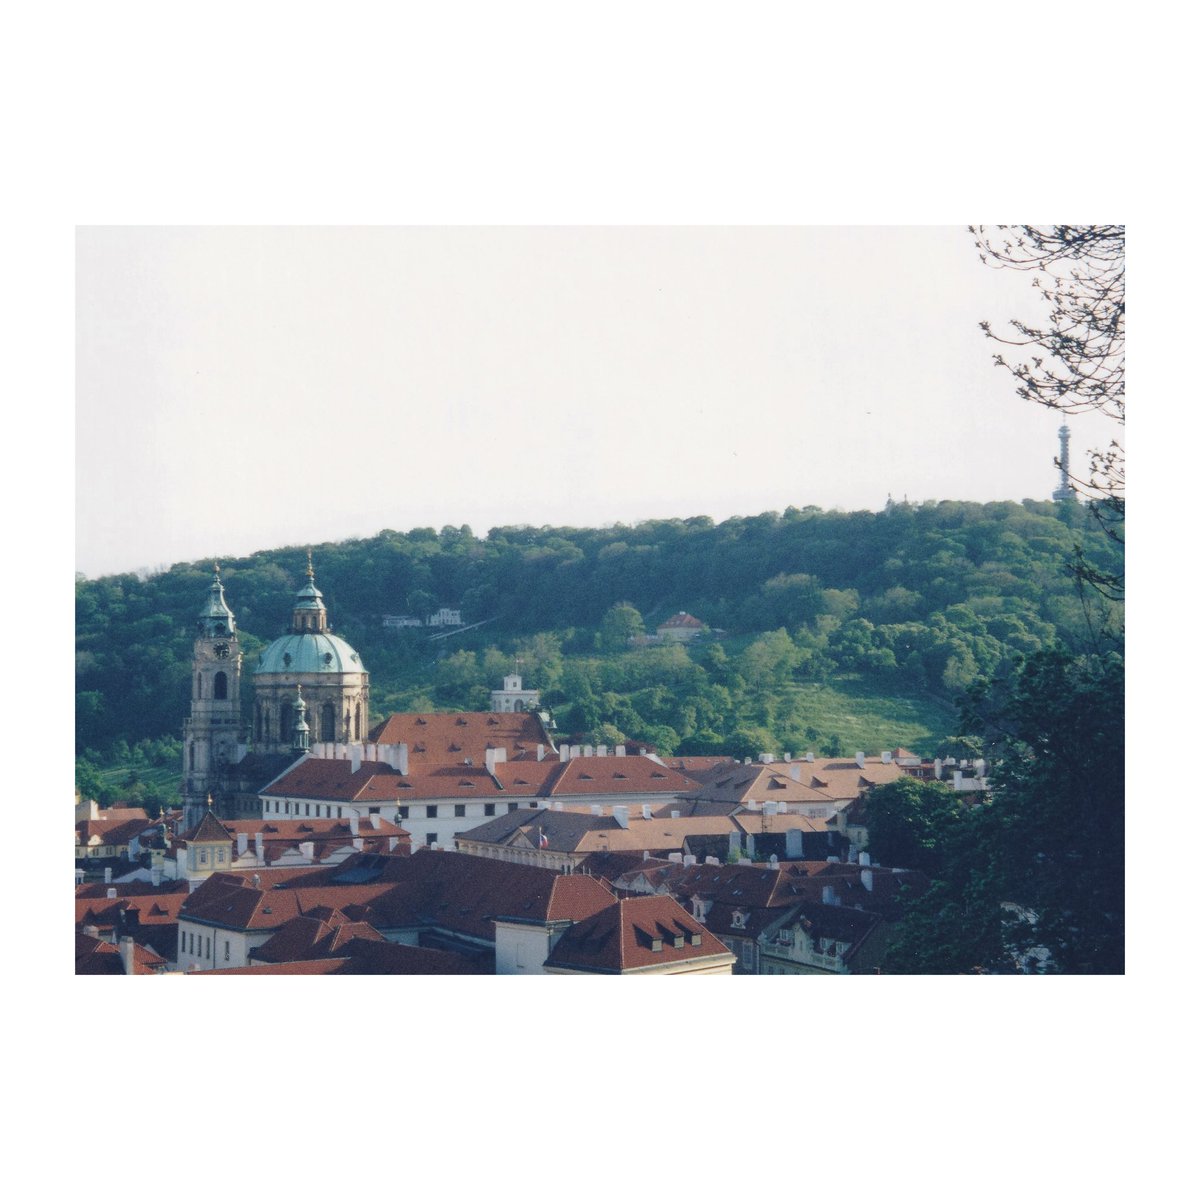 Praha. #Photographedin1999 #photograghy #CzechRepublic